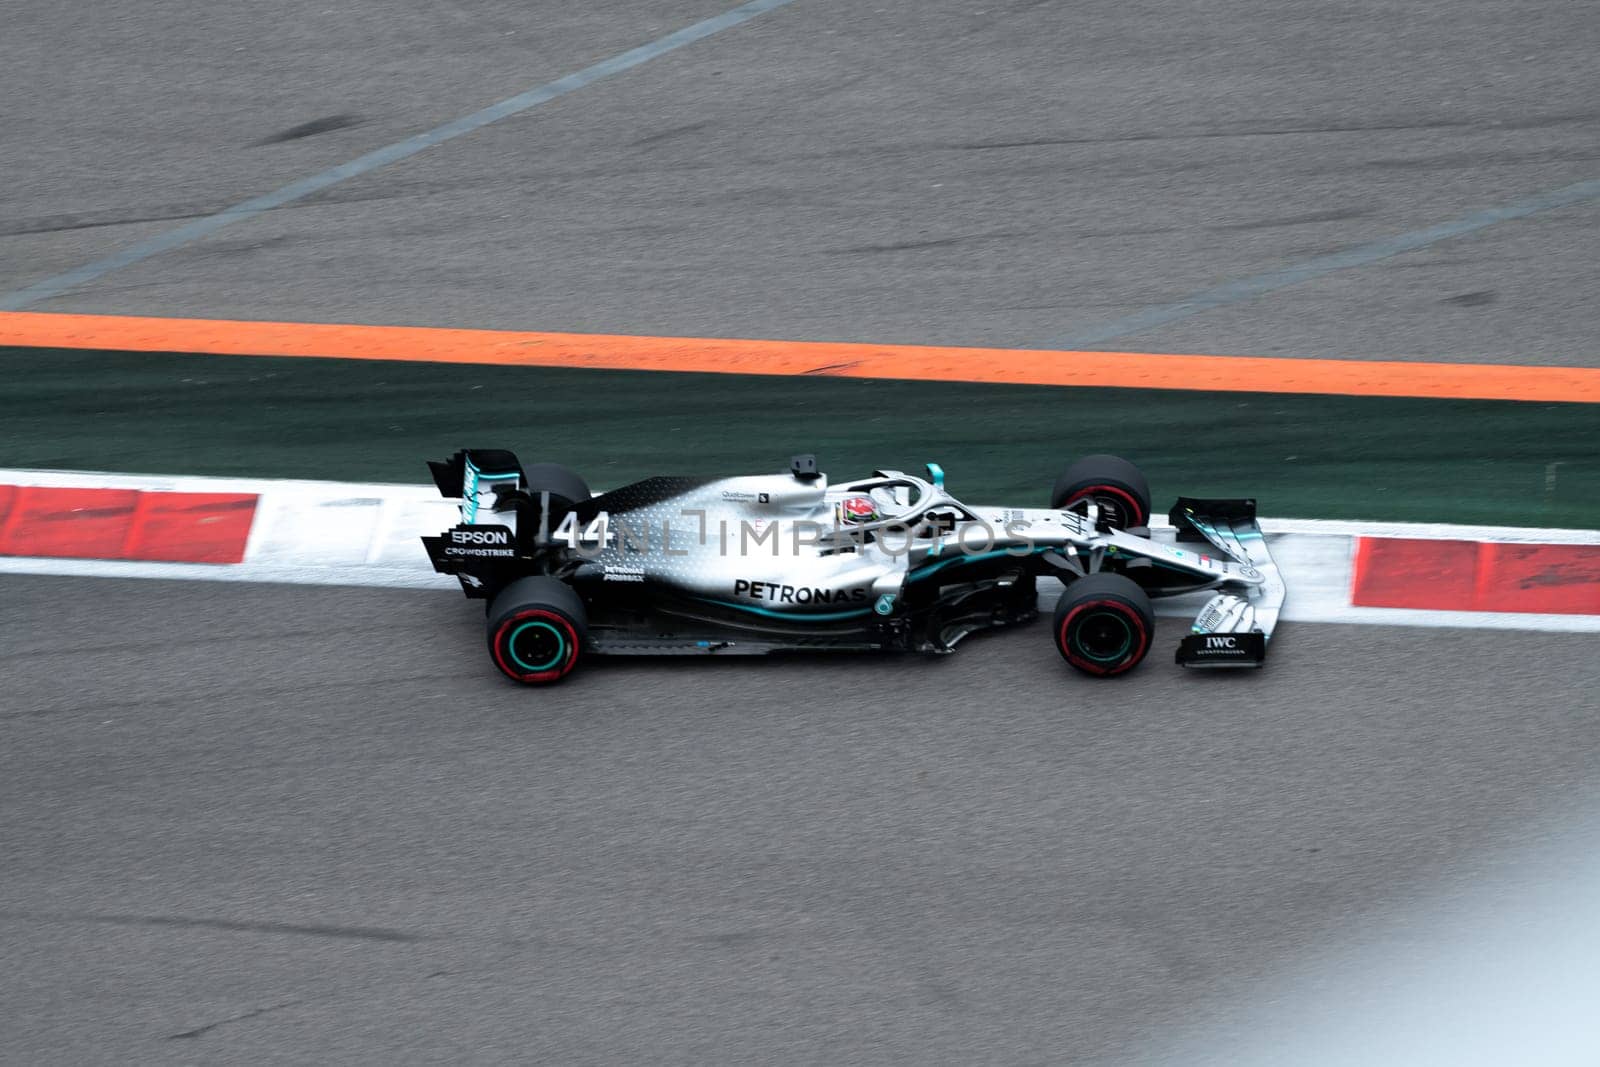 SOCHI, RUSSIA - 29 September 2019: Lewis Hamilton from Petronas Mercedes F1 Racing team rat Formula 1 Grand Prix of Russia 2019 by MKolesnikov